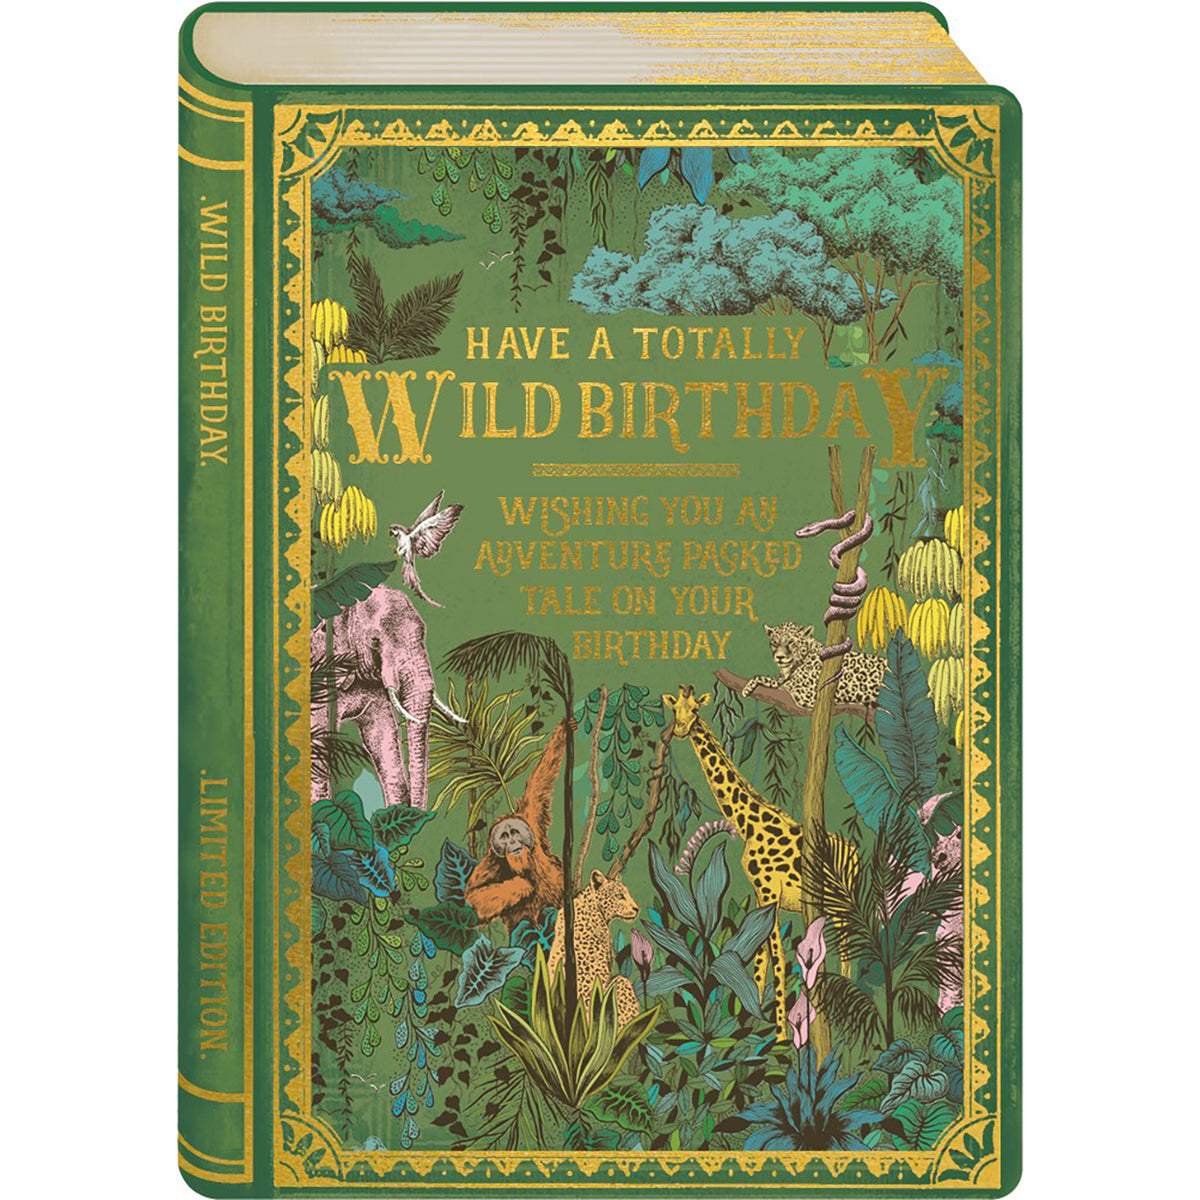 Totally Wild Birthday Card